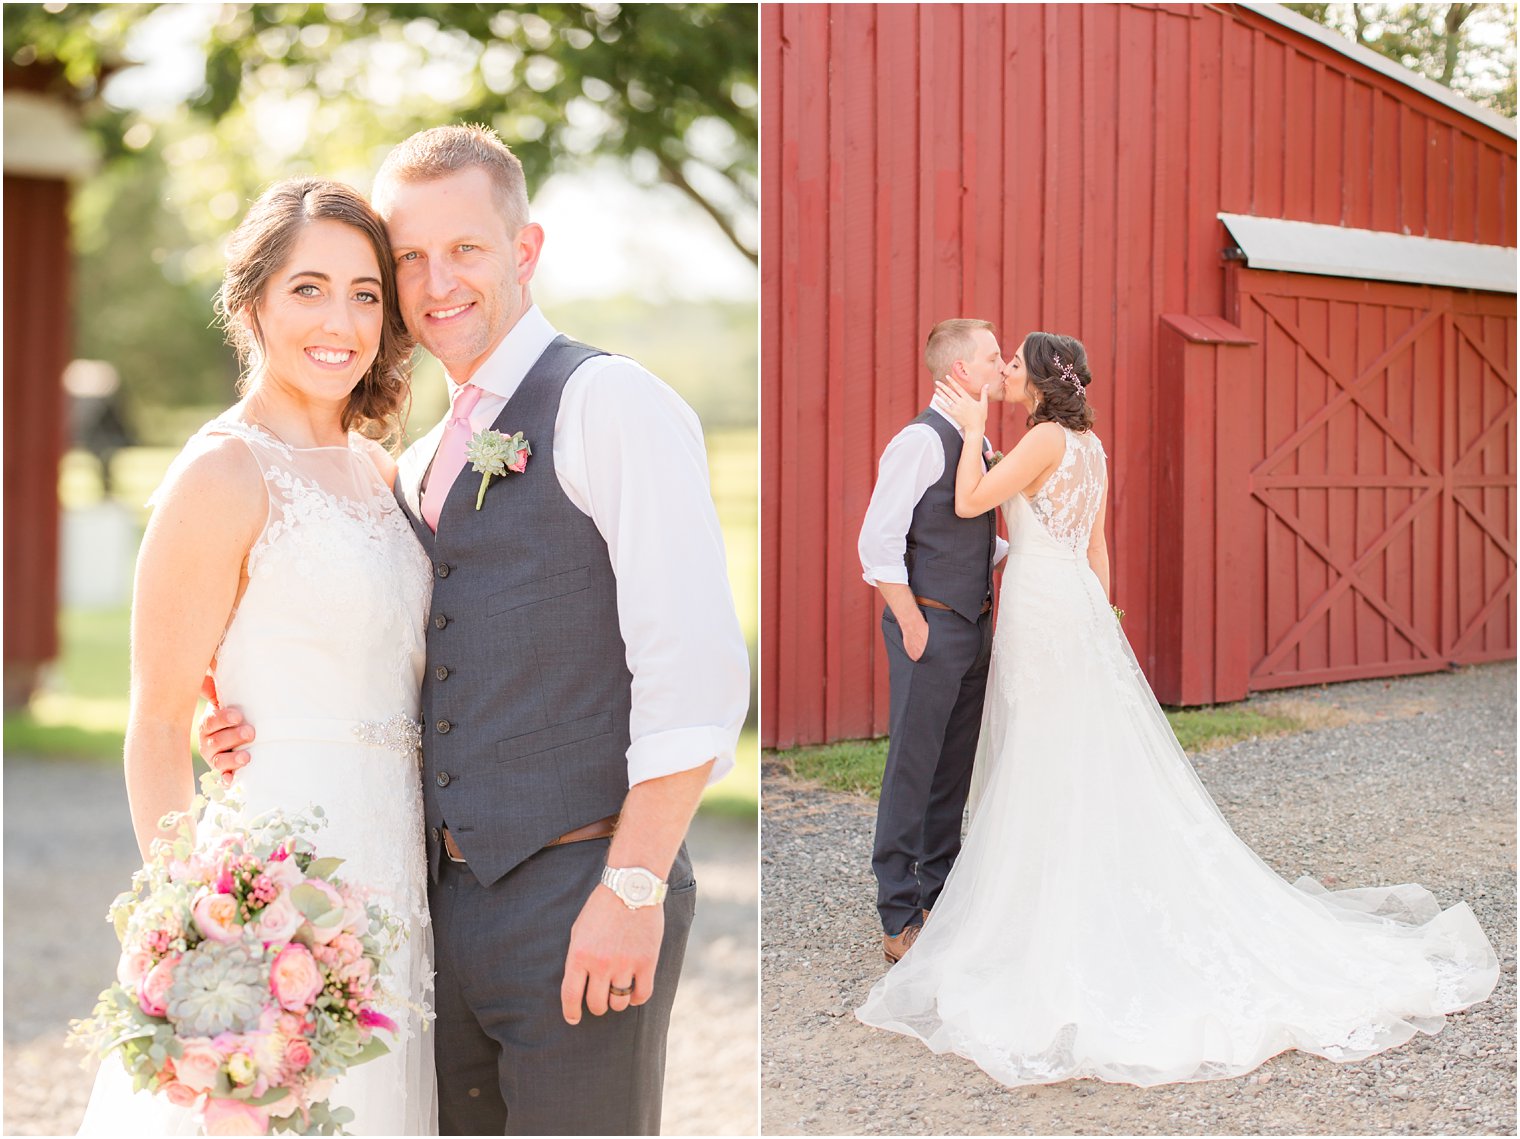 Bride and groom photos at Stone Rows Farm